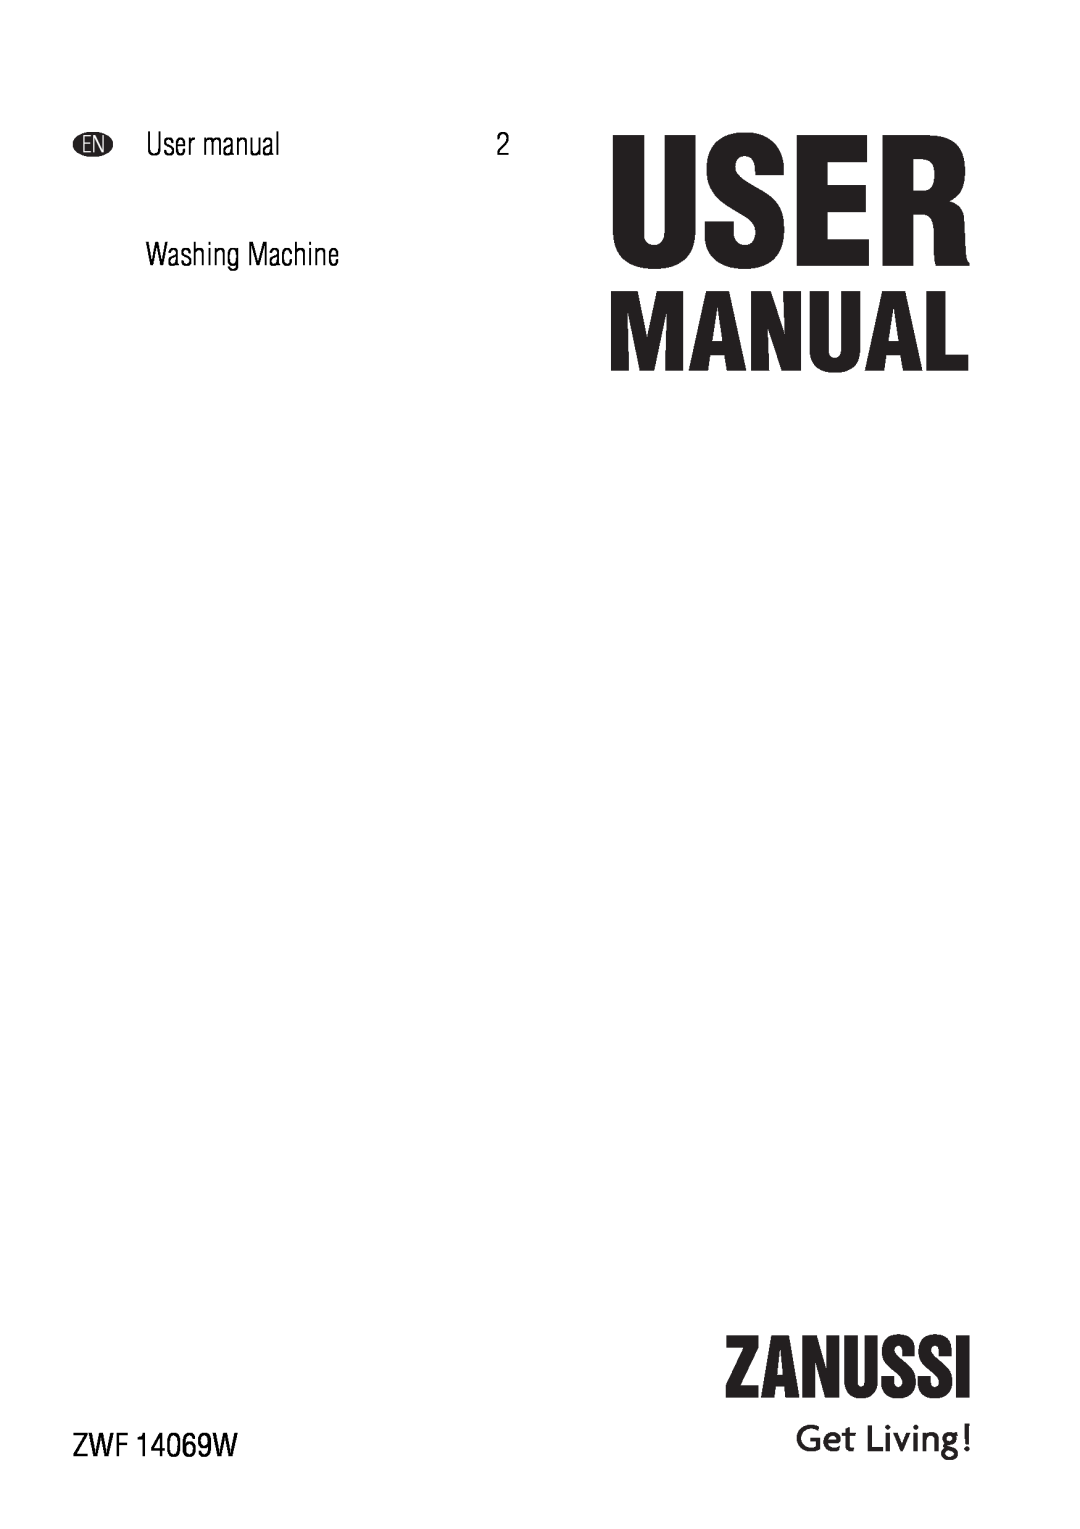 Zanussi 192994960-00-202009 user manual User manual, Washing Machine, ZWF 14069W 